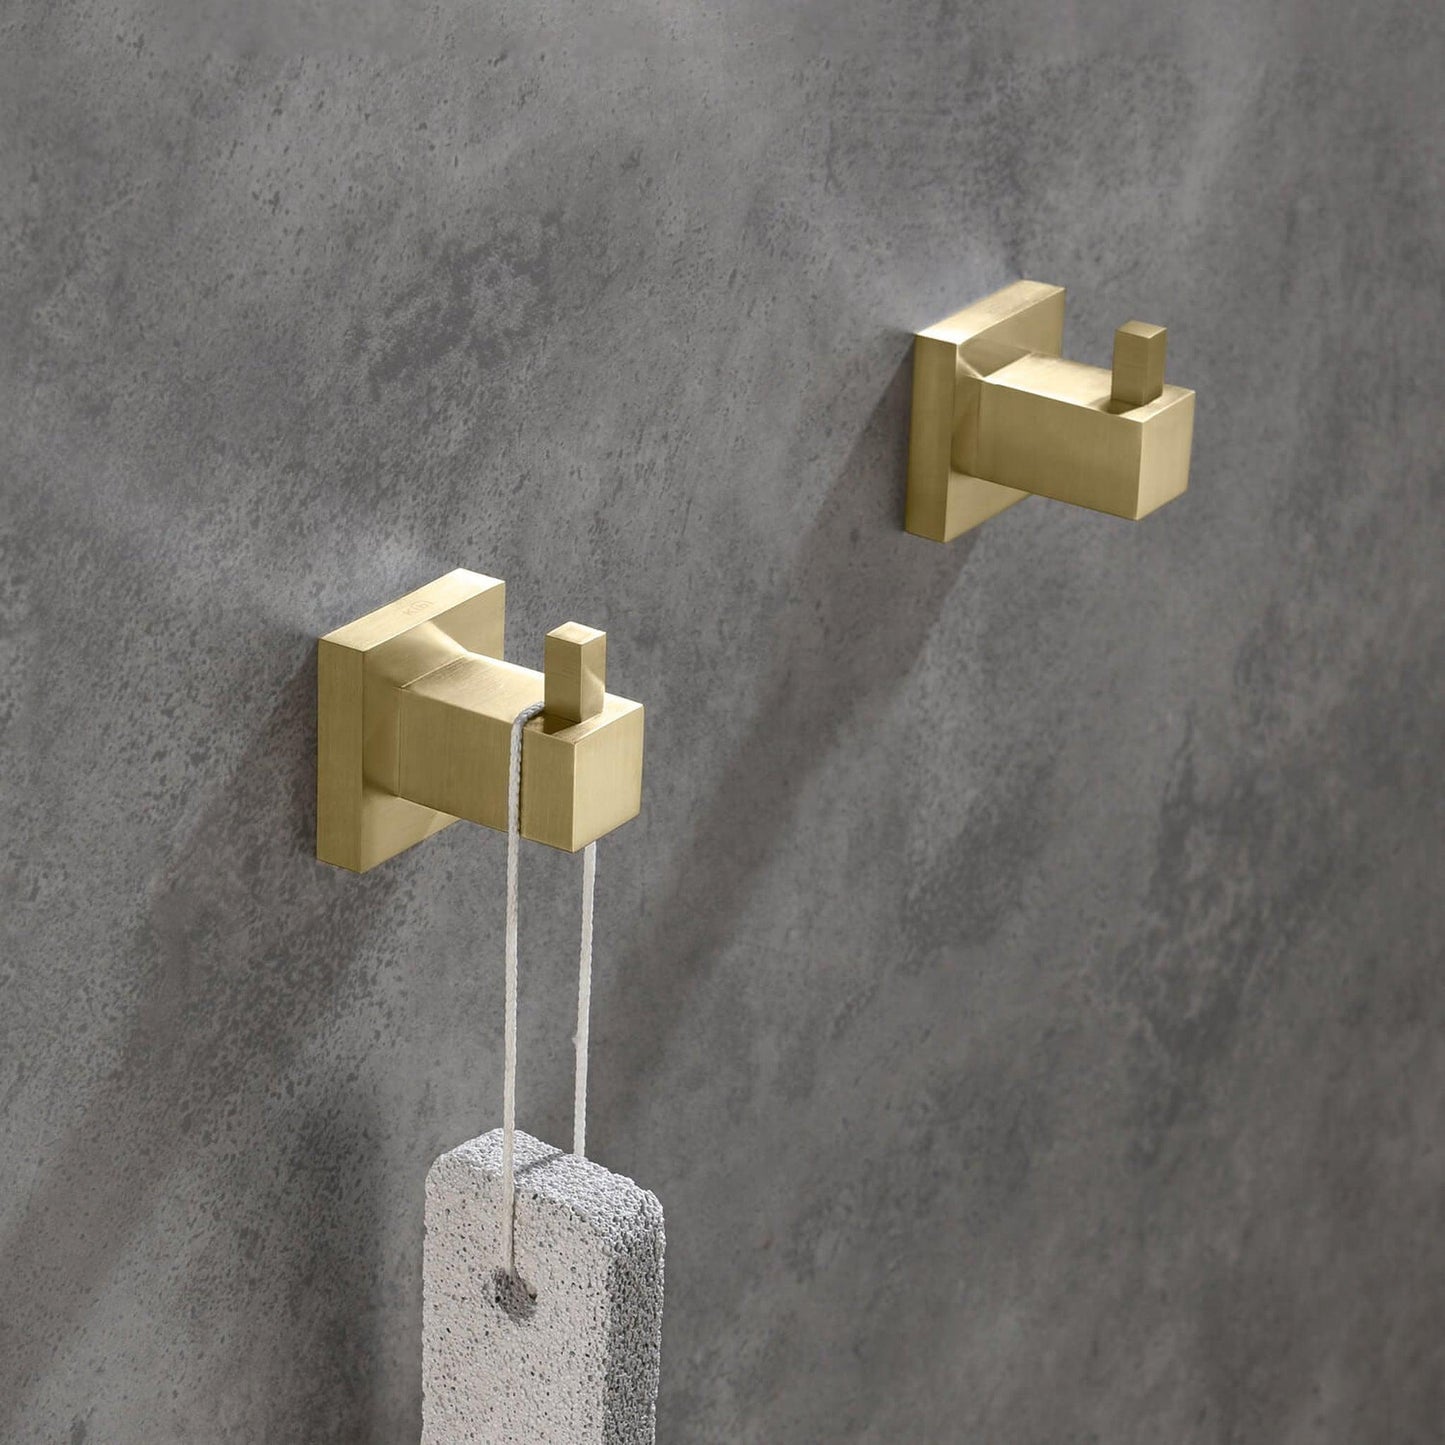 KIBI Cube Brass Bathroom Robe Hook in Brushed Gold Finish